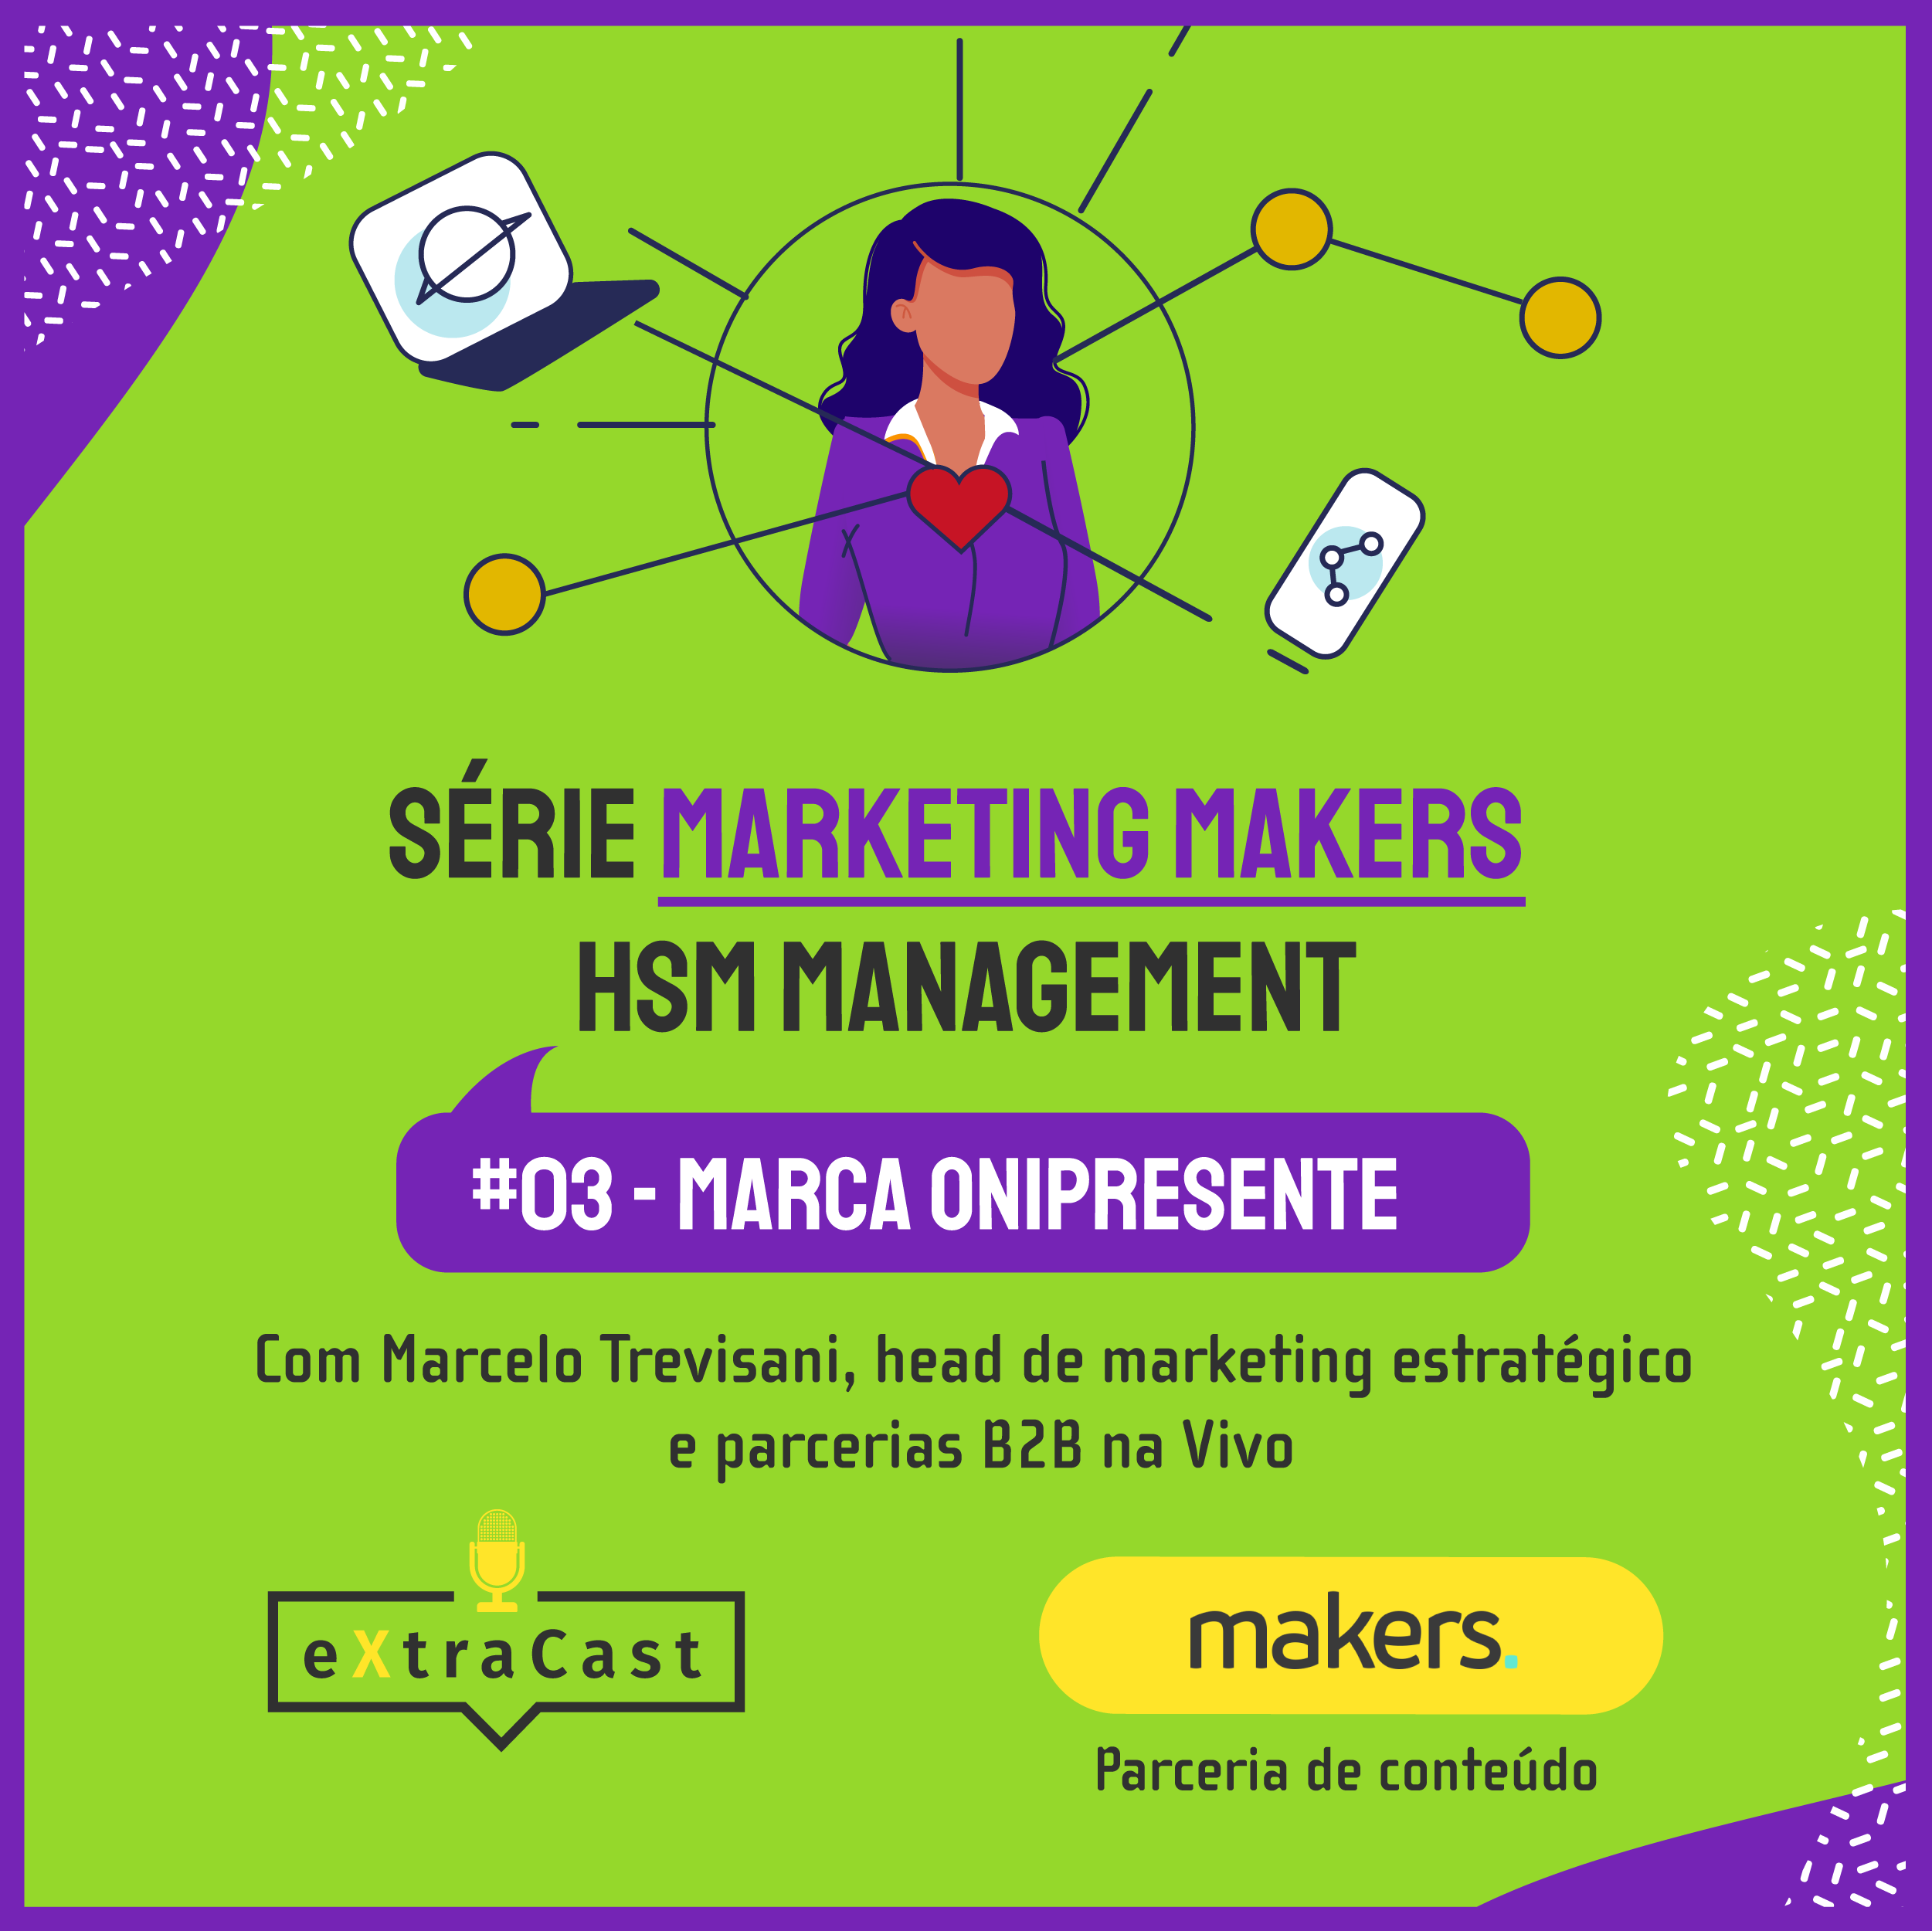 Podcast #03 - eXtracast com Marketing Makers: Marca Onipresente